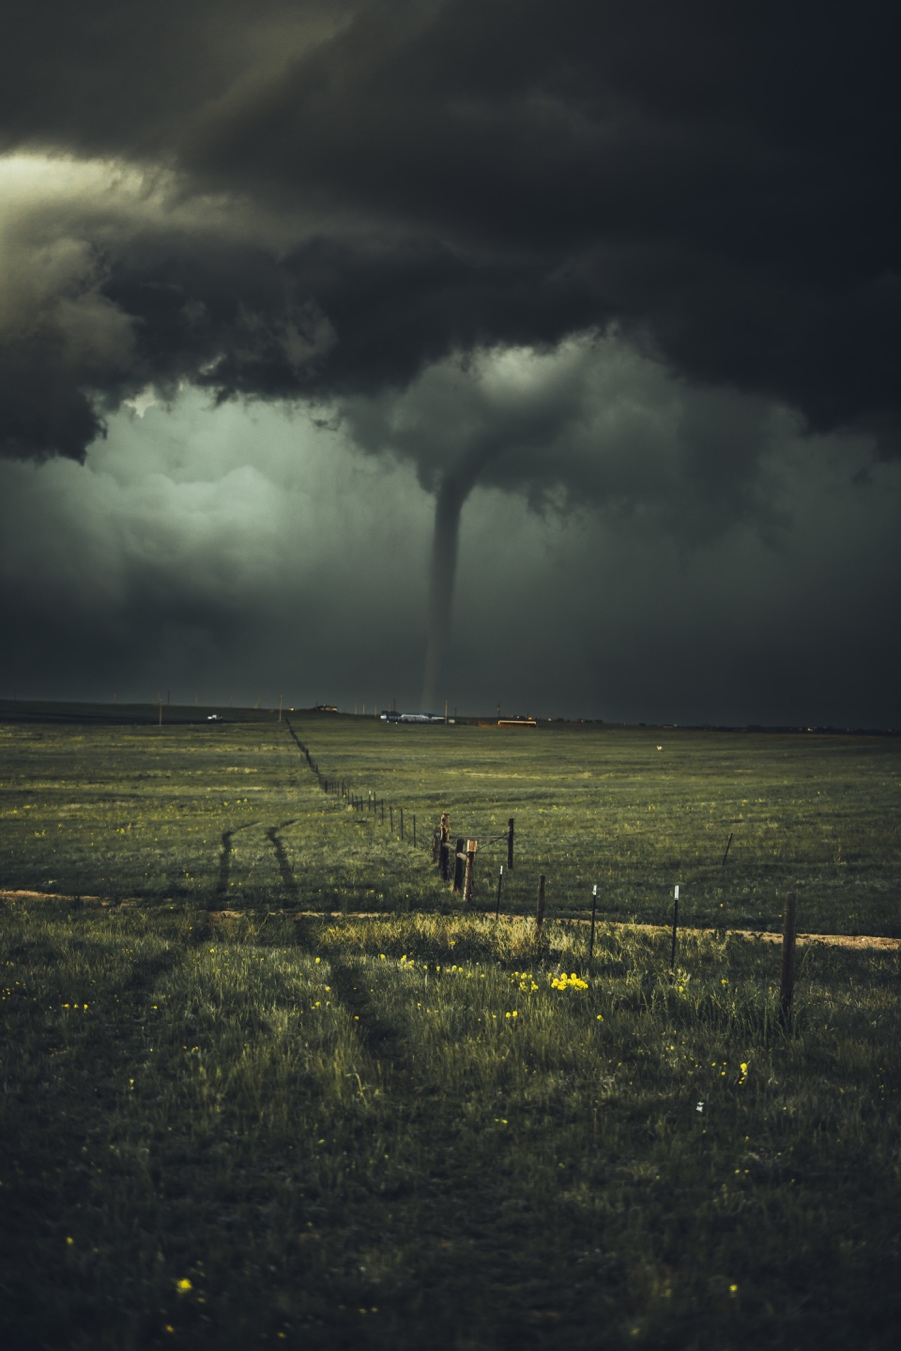 A tornado in a field